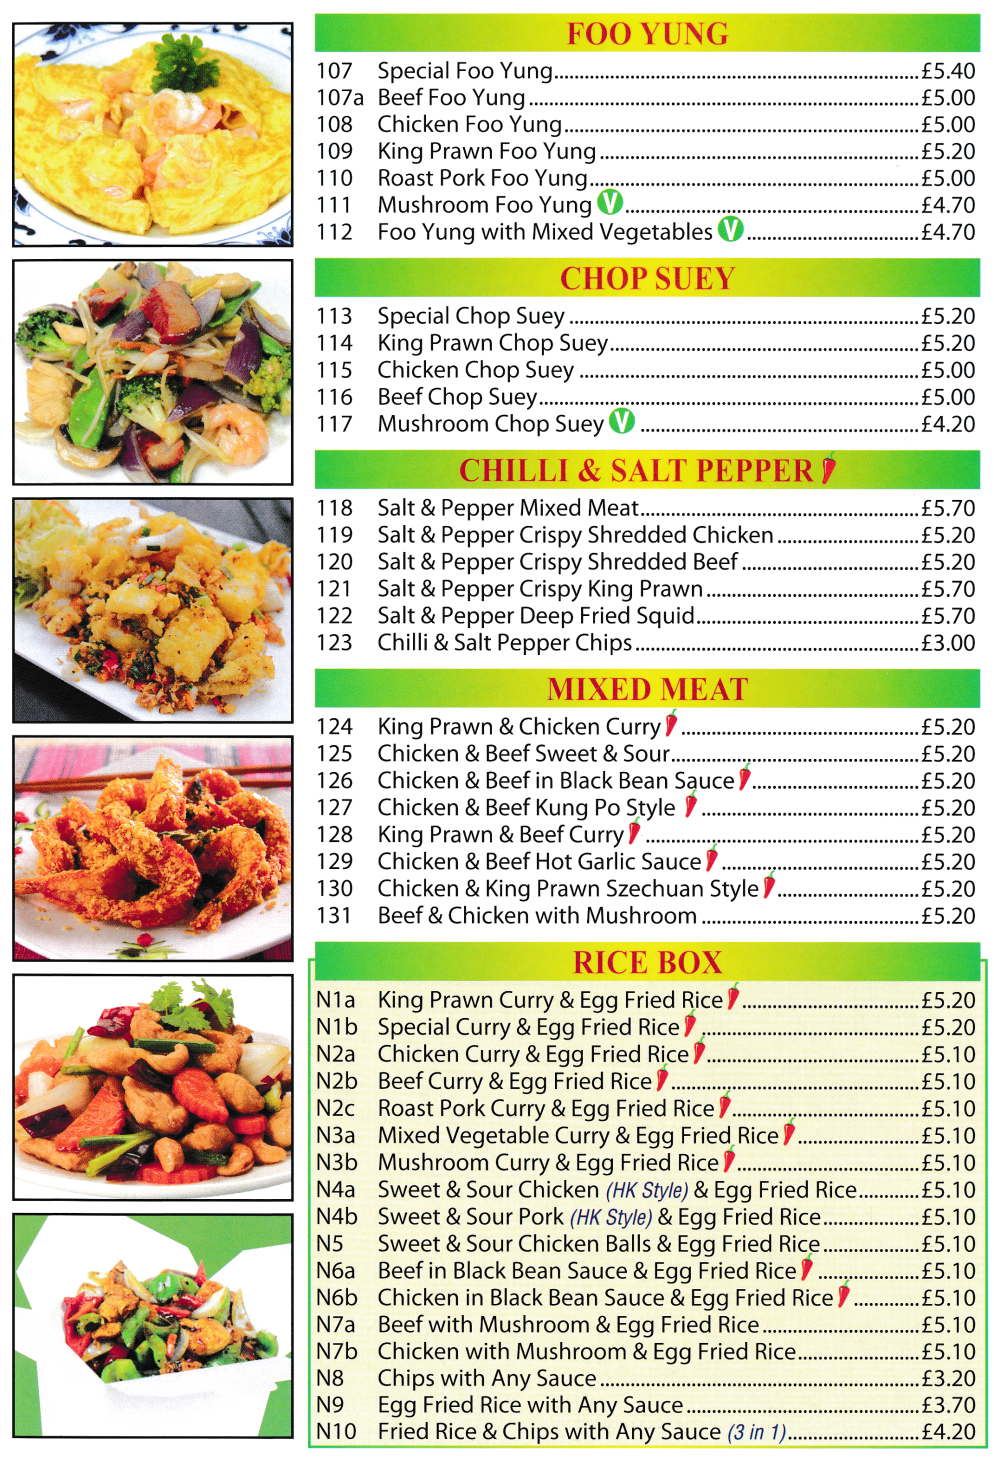 Menu for China Palace - Special Foo Yung, Salt & Pepper Deep Fried Squid, King Prawn & Chicken Curry, Chicken Chop Suey, Mushroom Foo Yung..